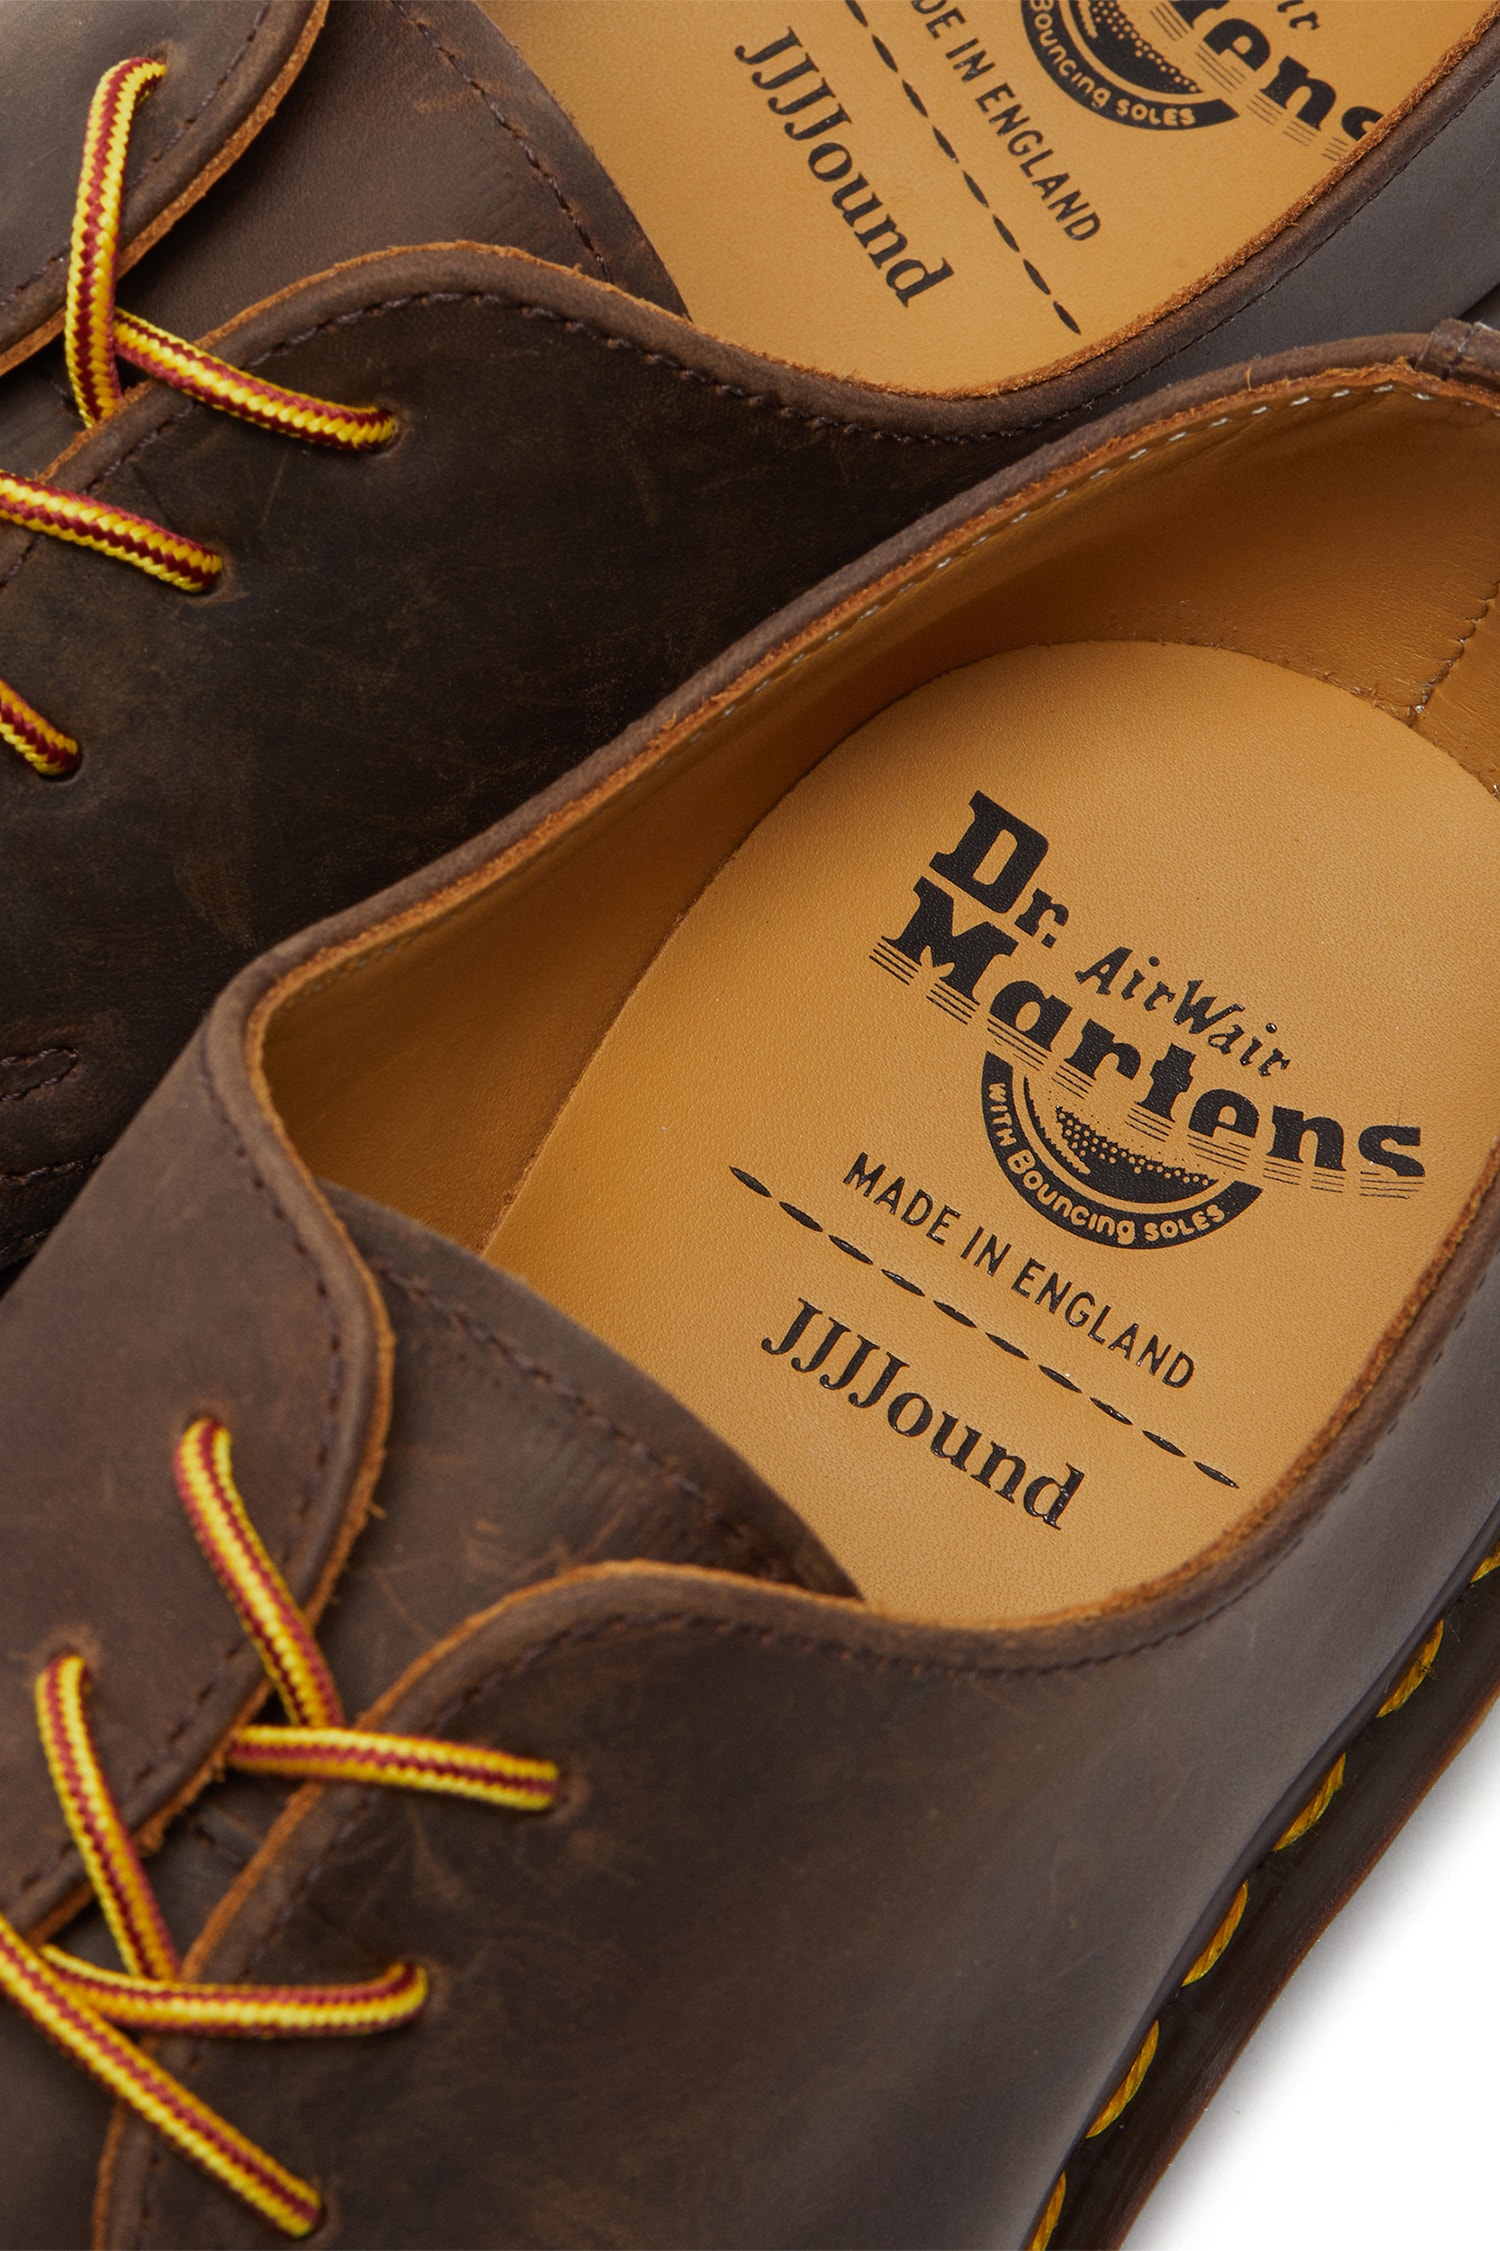 Dr.Martens x JJJJound 英產系列鞋履正式登場